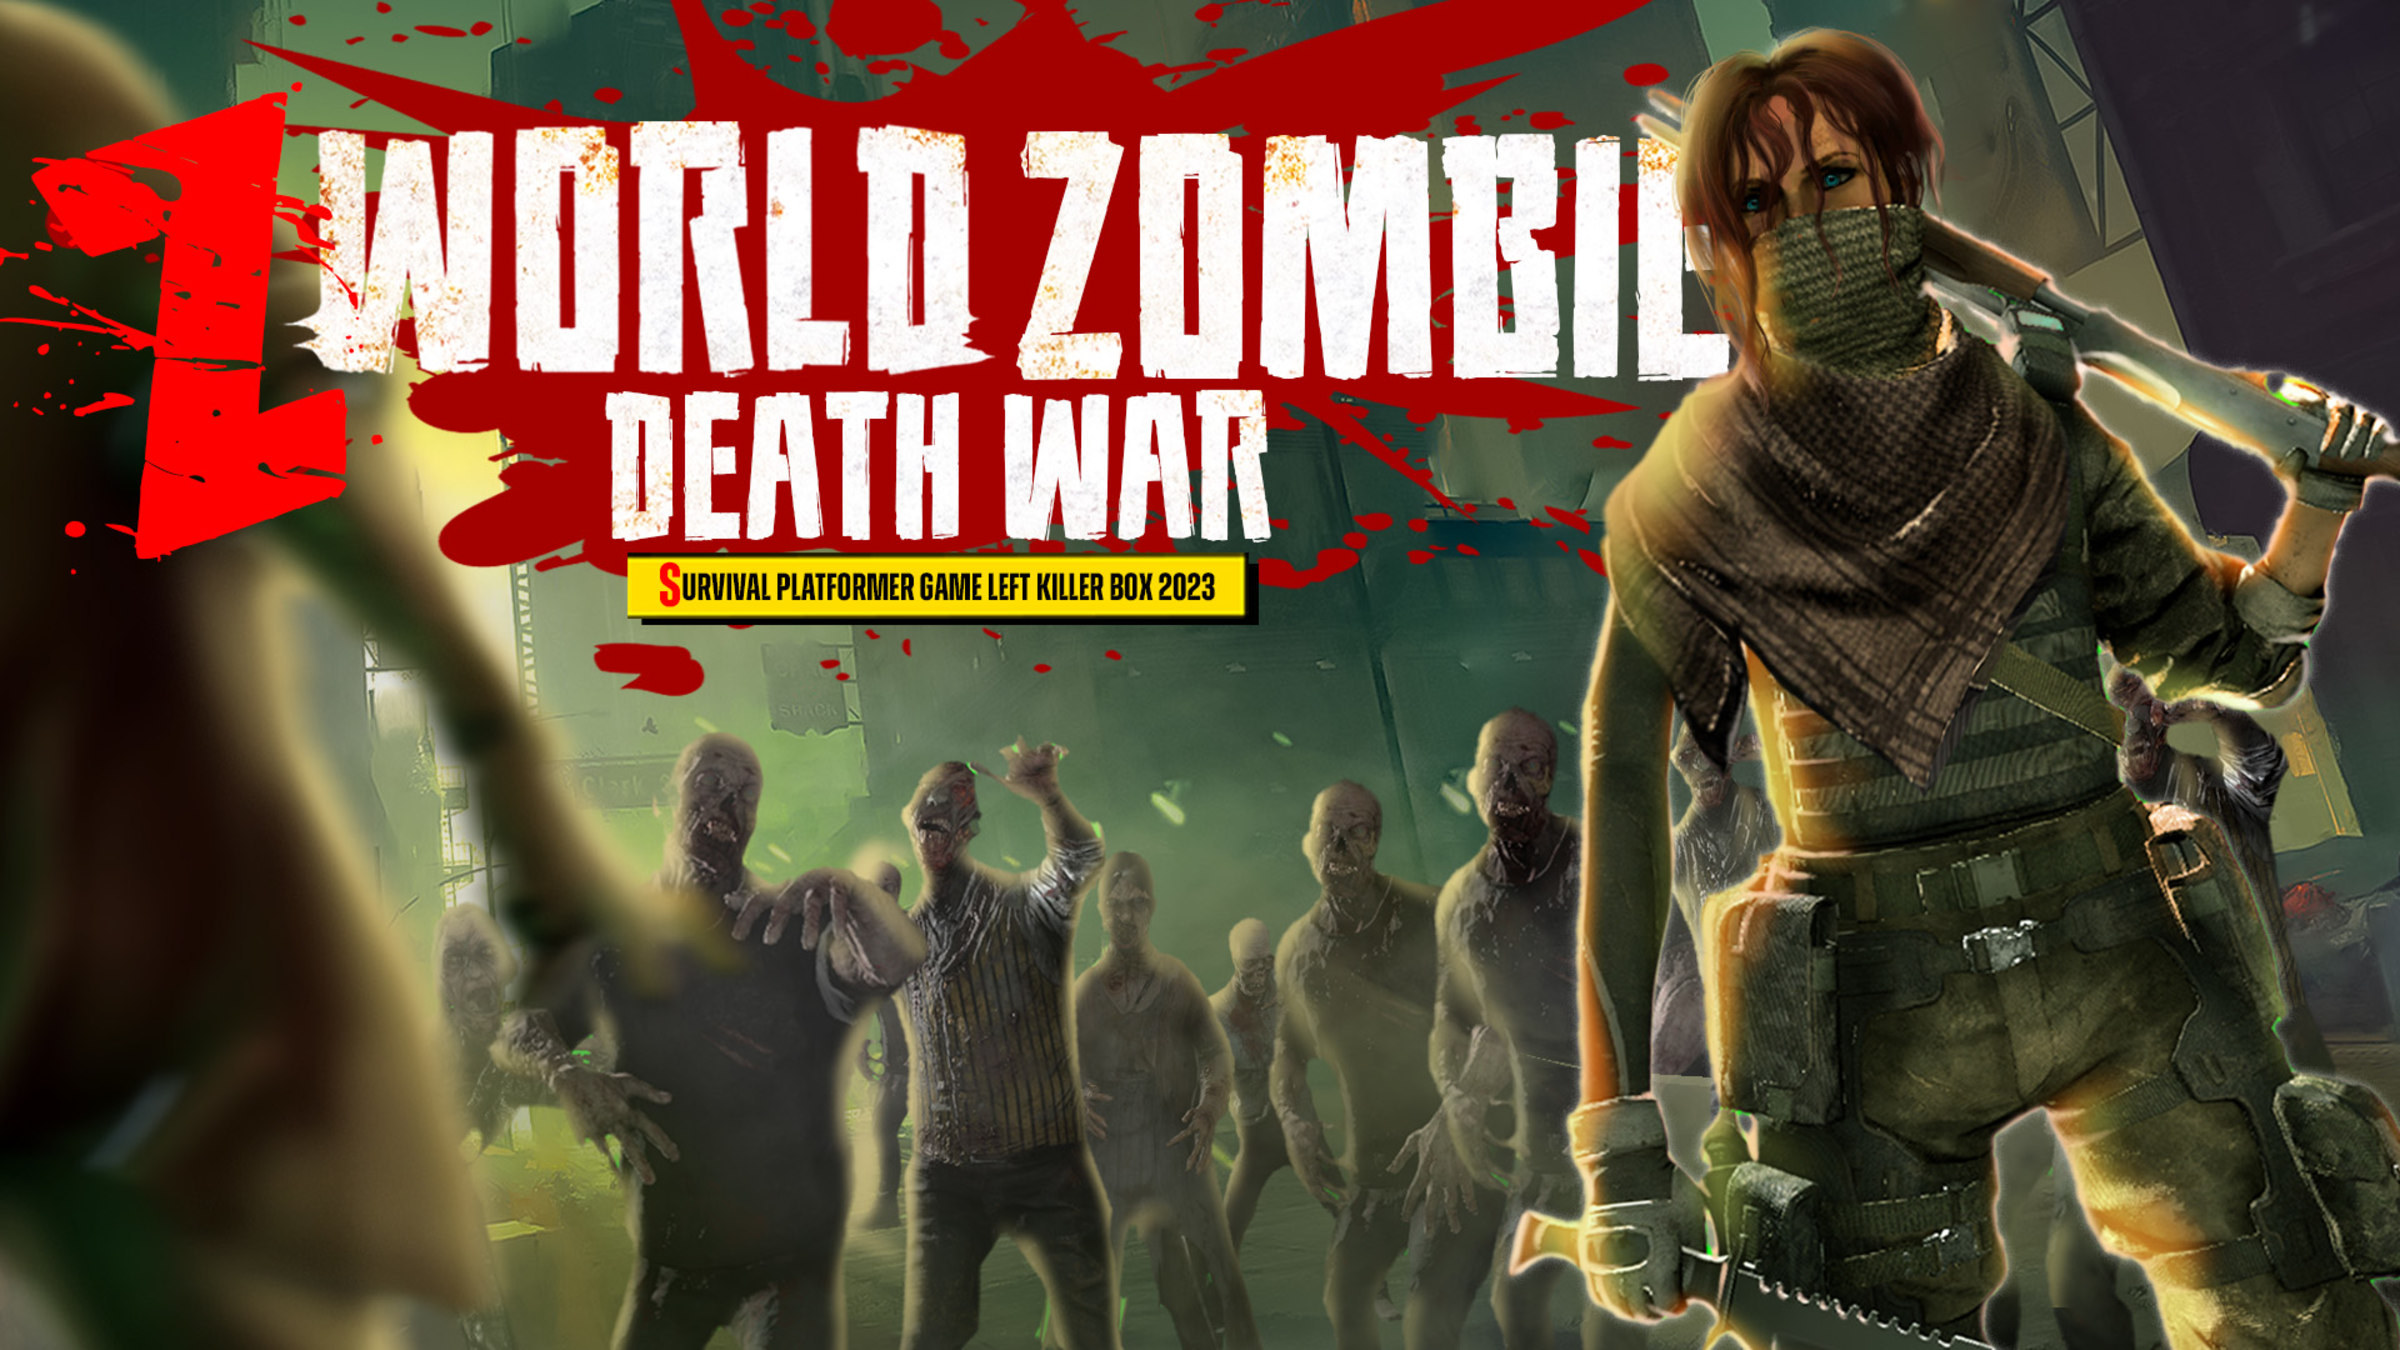 Z World Zombie Death War Survival Platformer Game Left Killer Box 2023 for Nintendo Switch